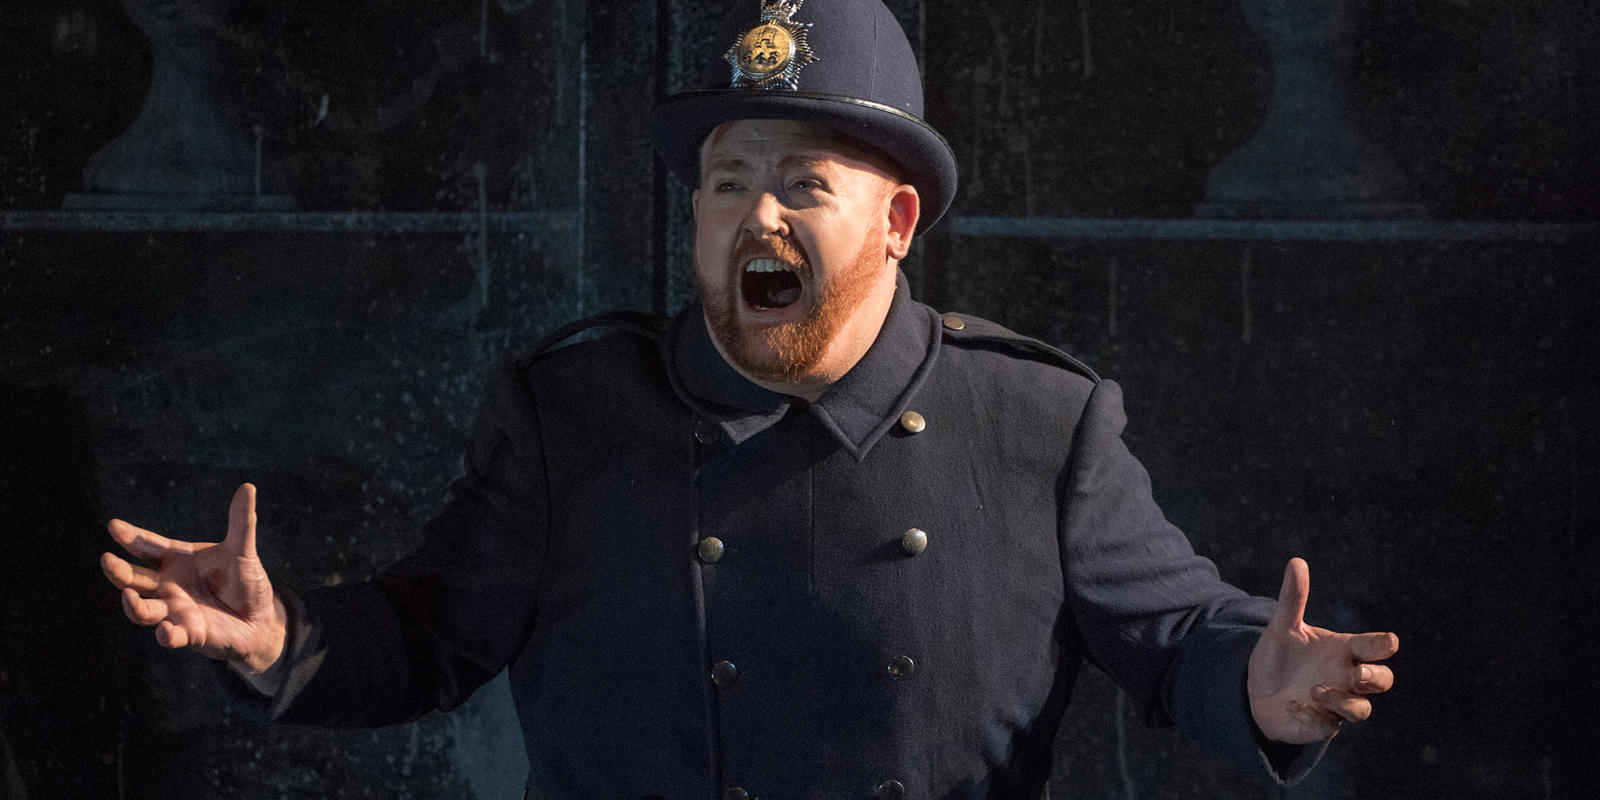 policeman shouting